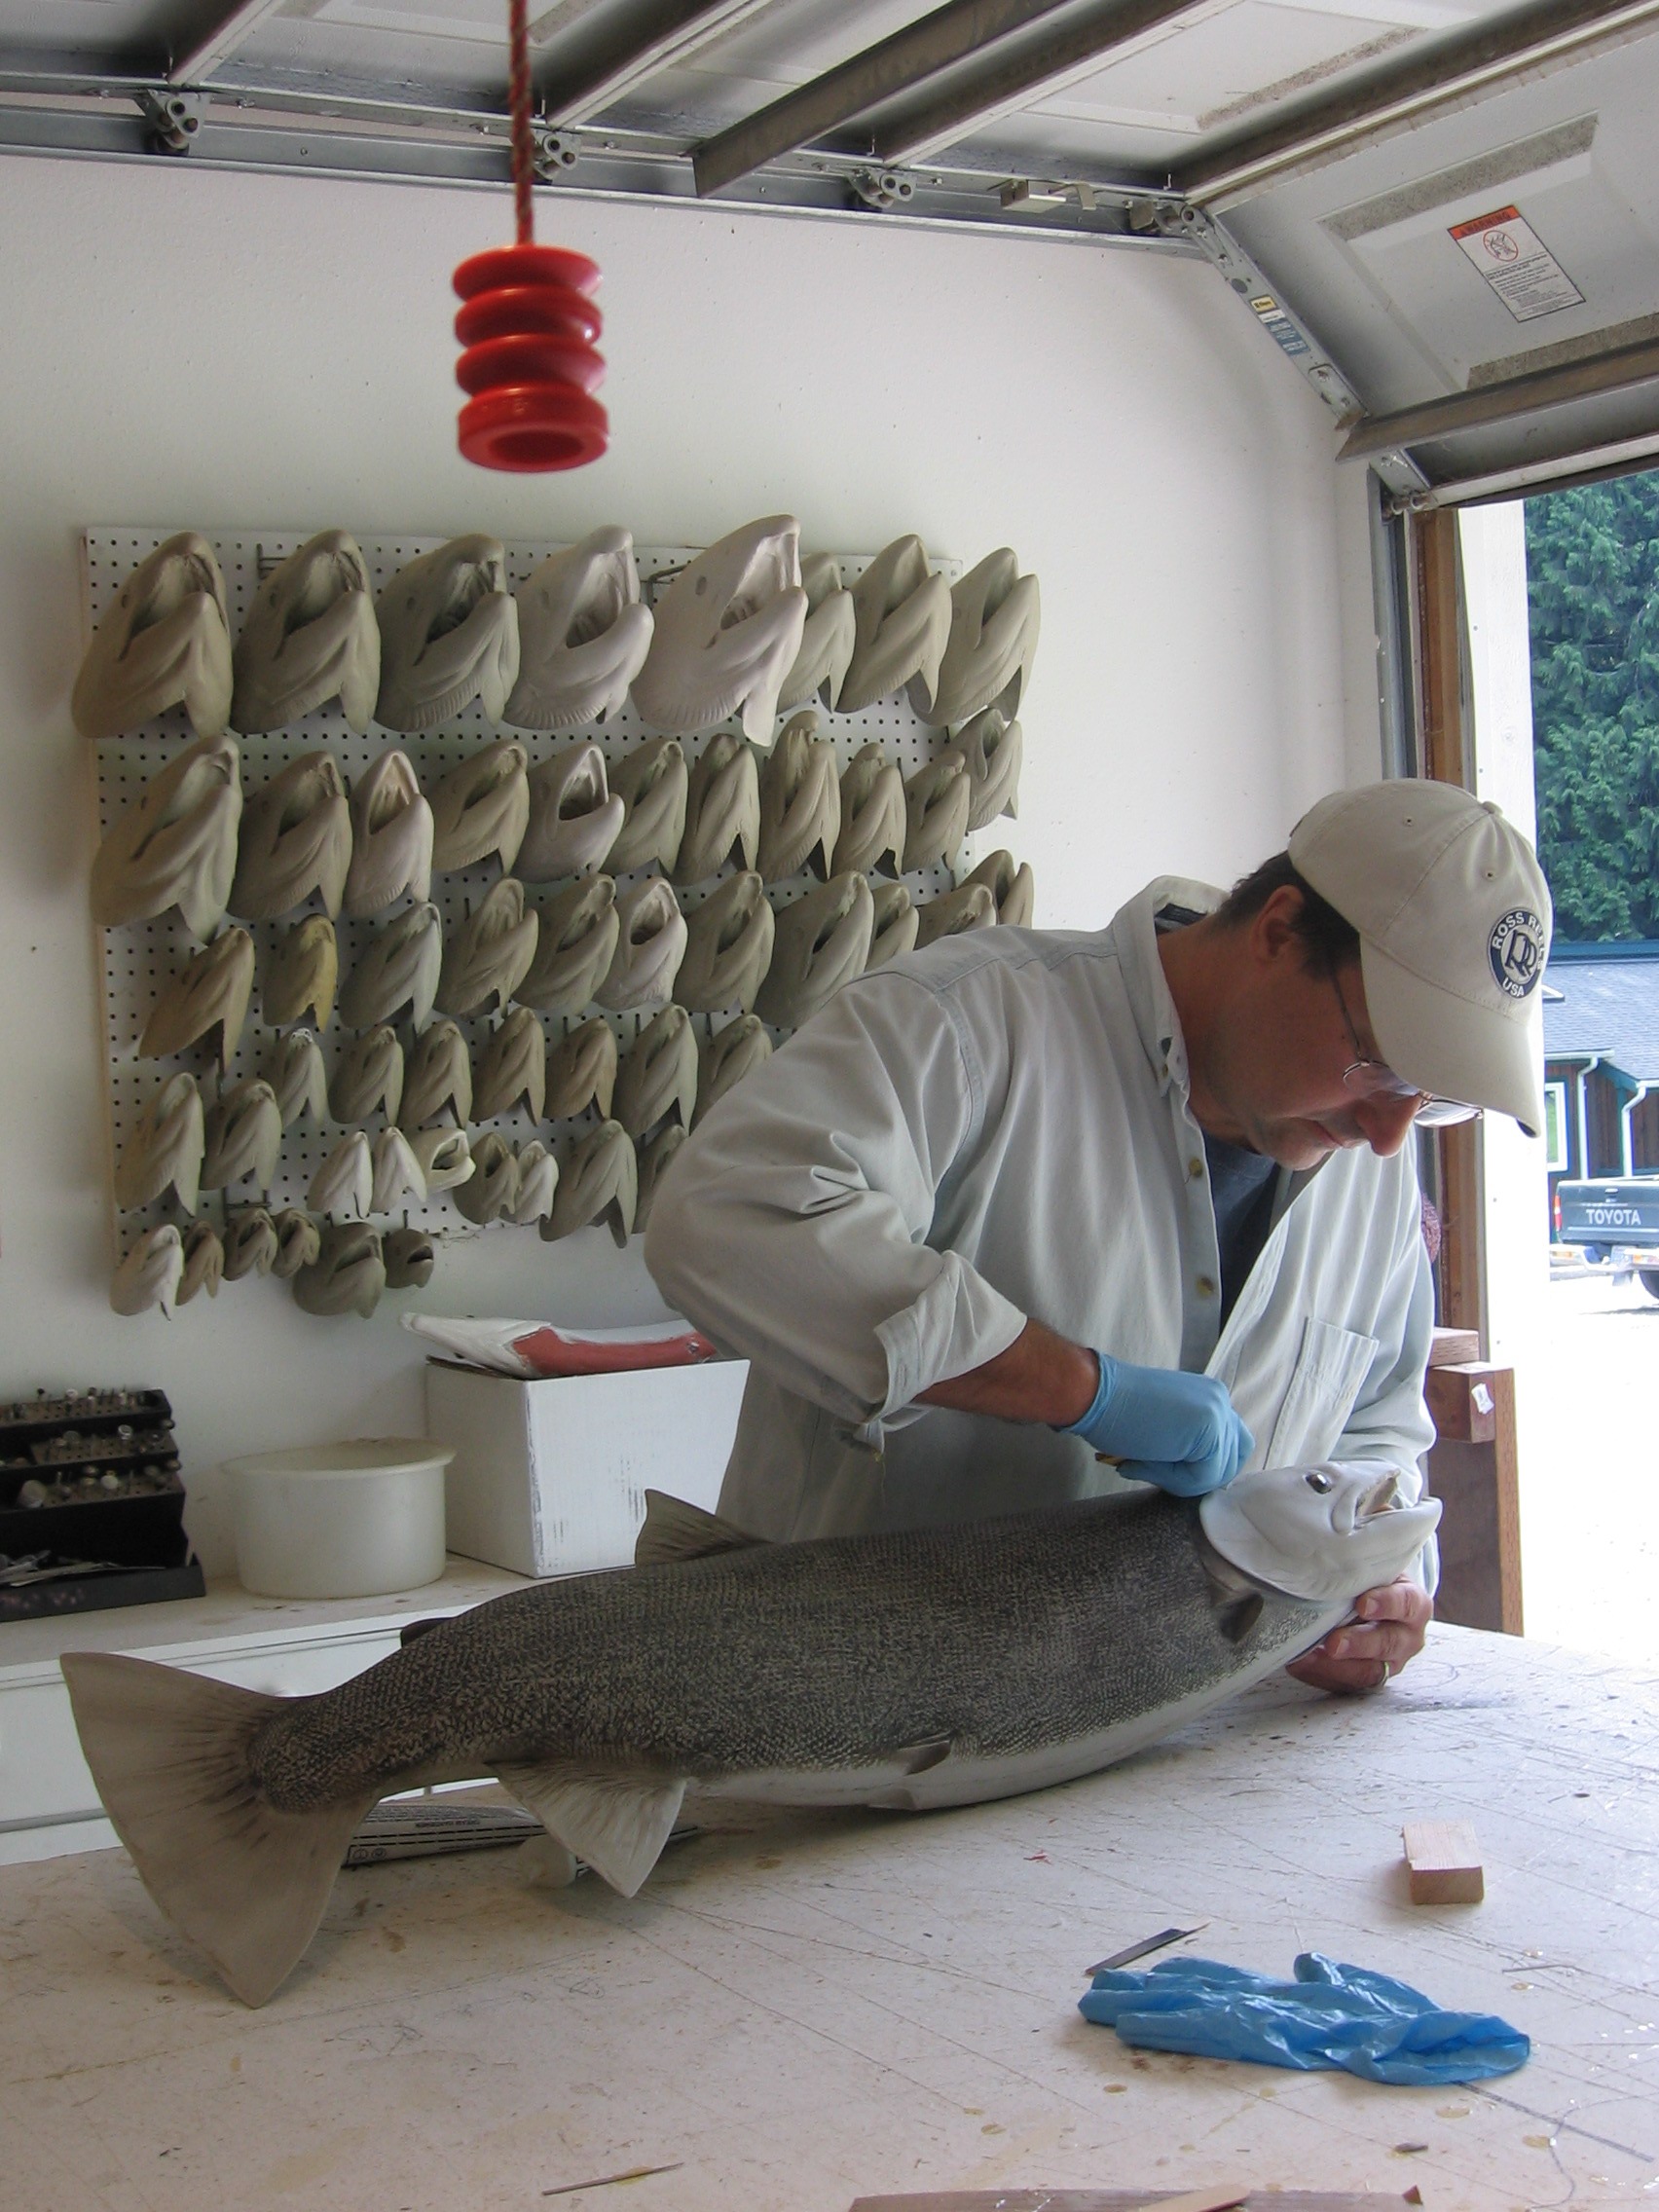 About fish replica artist Luke Filmer of Blackwater Fish Replicas